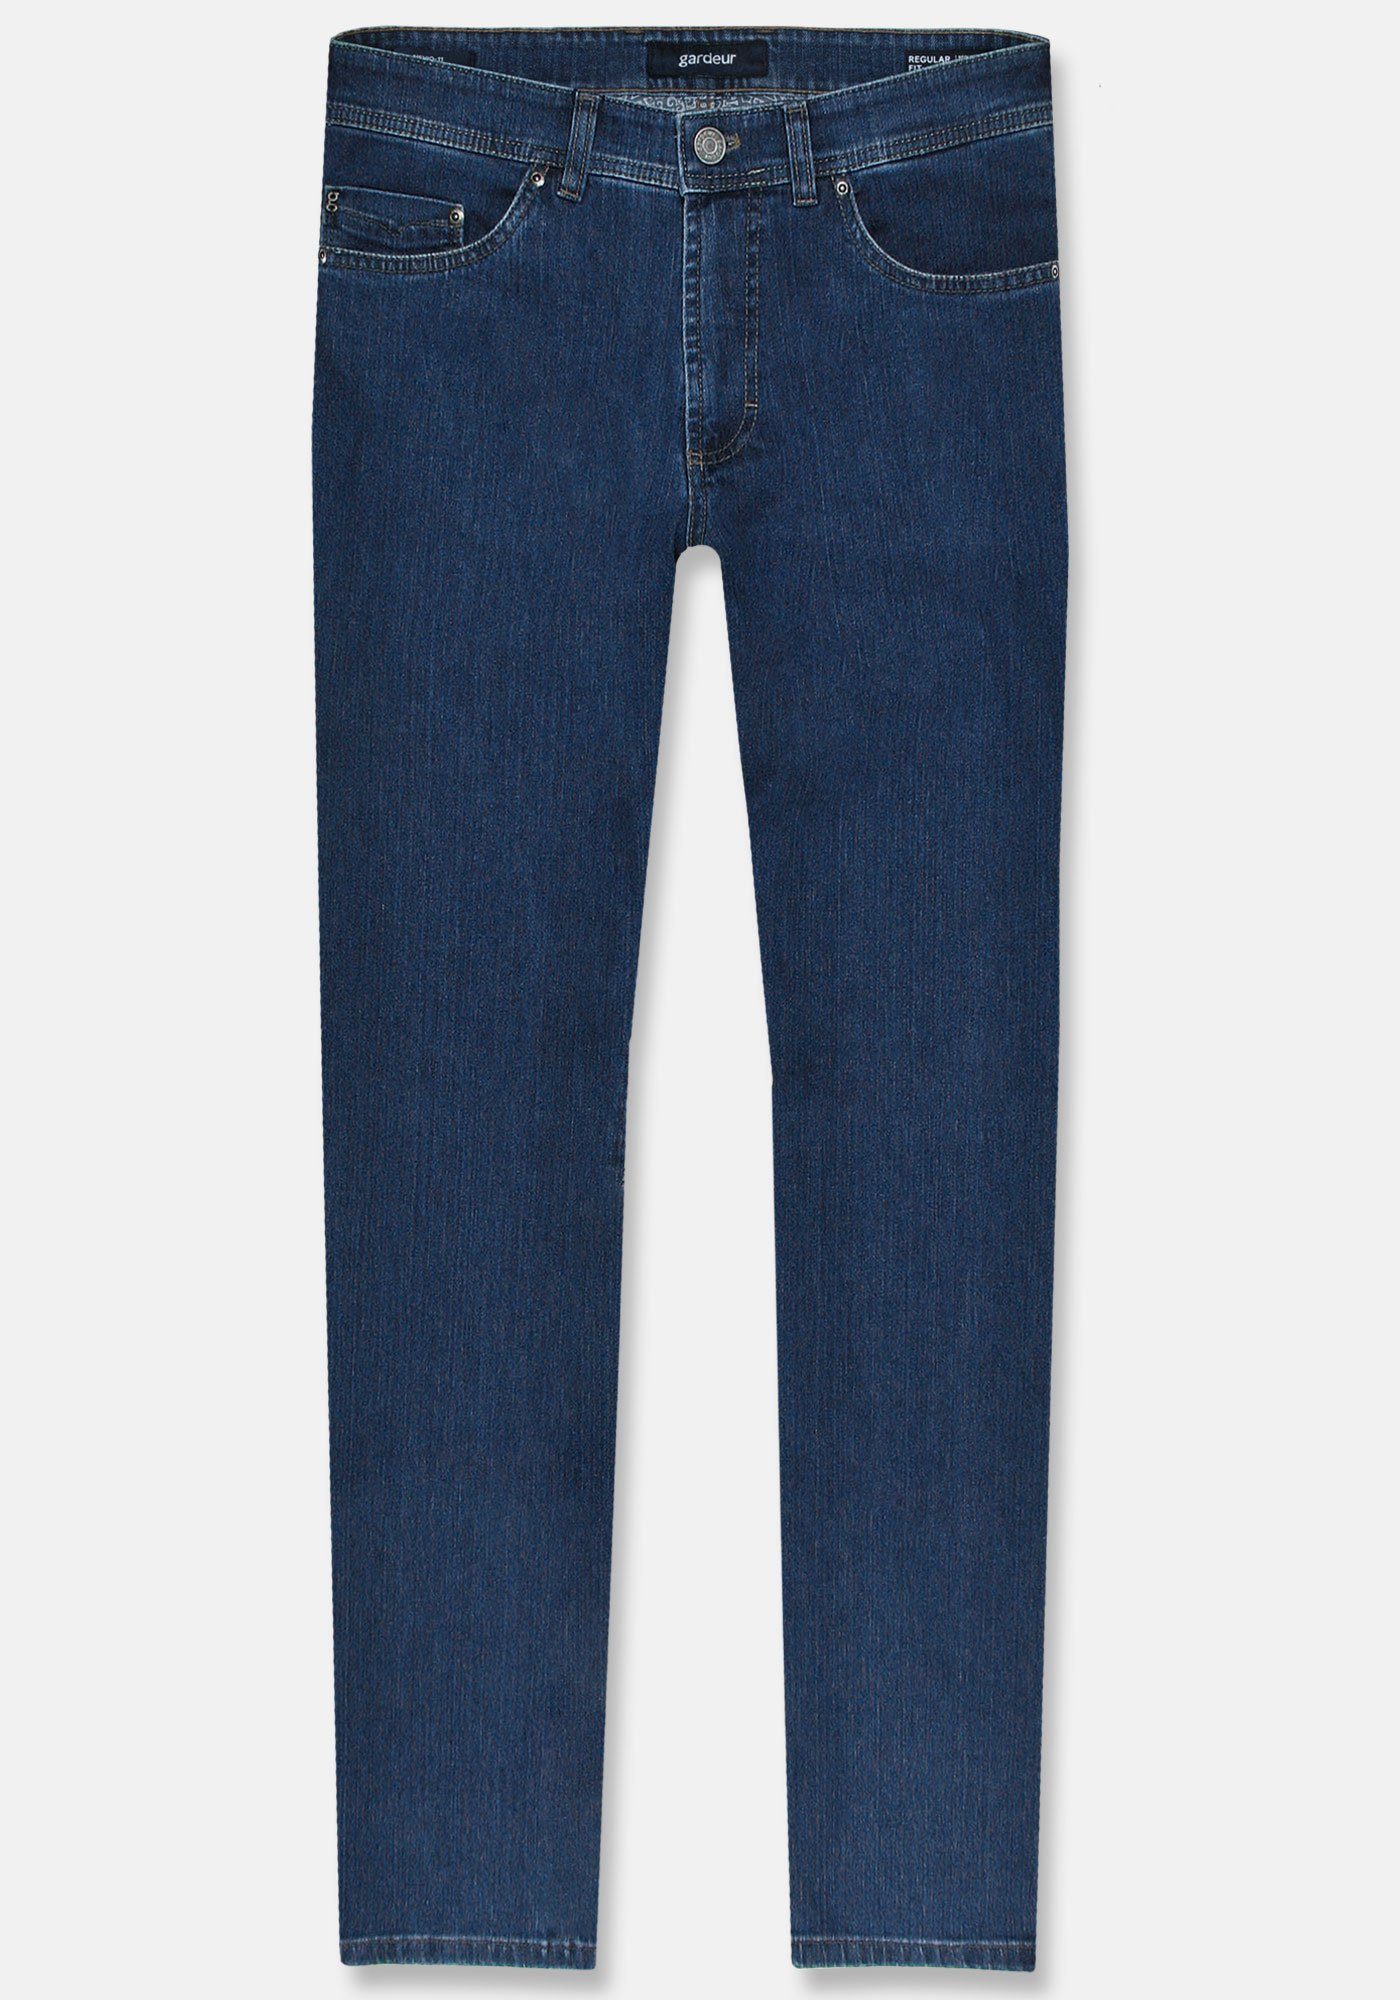 Atelier GARDEUR 5-Pocket-Jeans Nevio Regular Fit Stretch-Denim Dark Blue Stone Washed